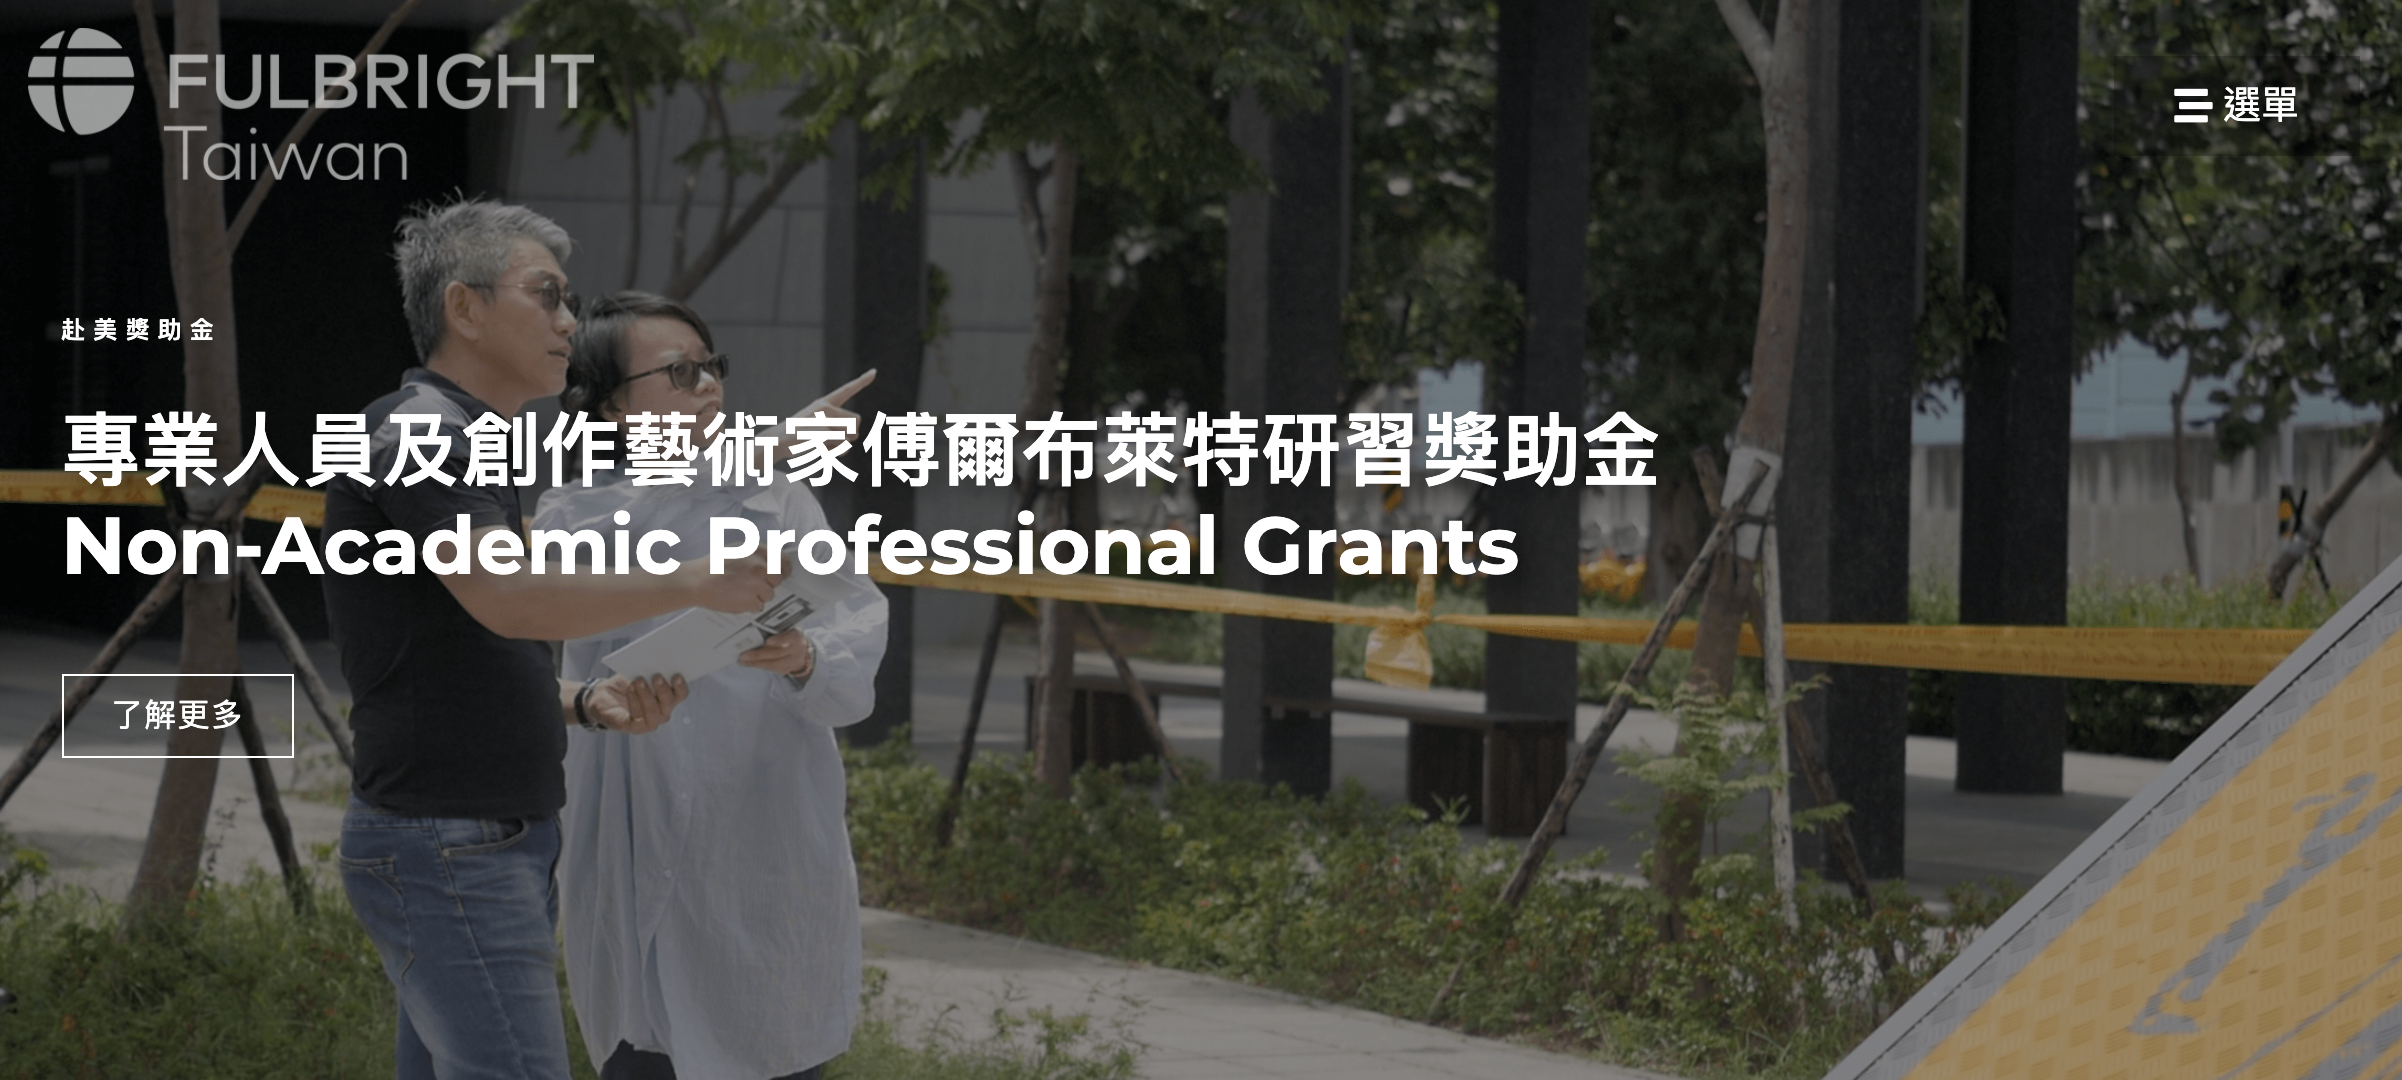 Non-Academic Professional Grants